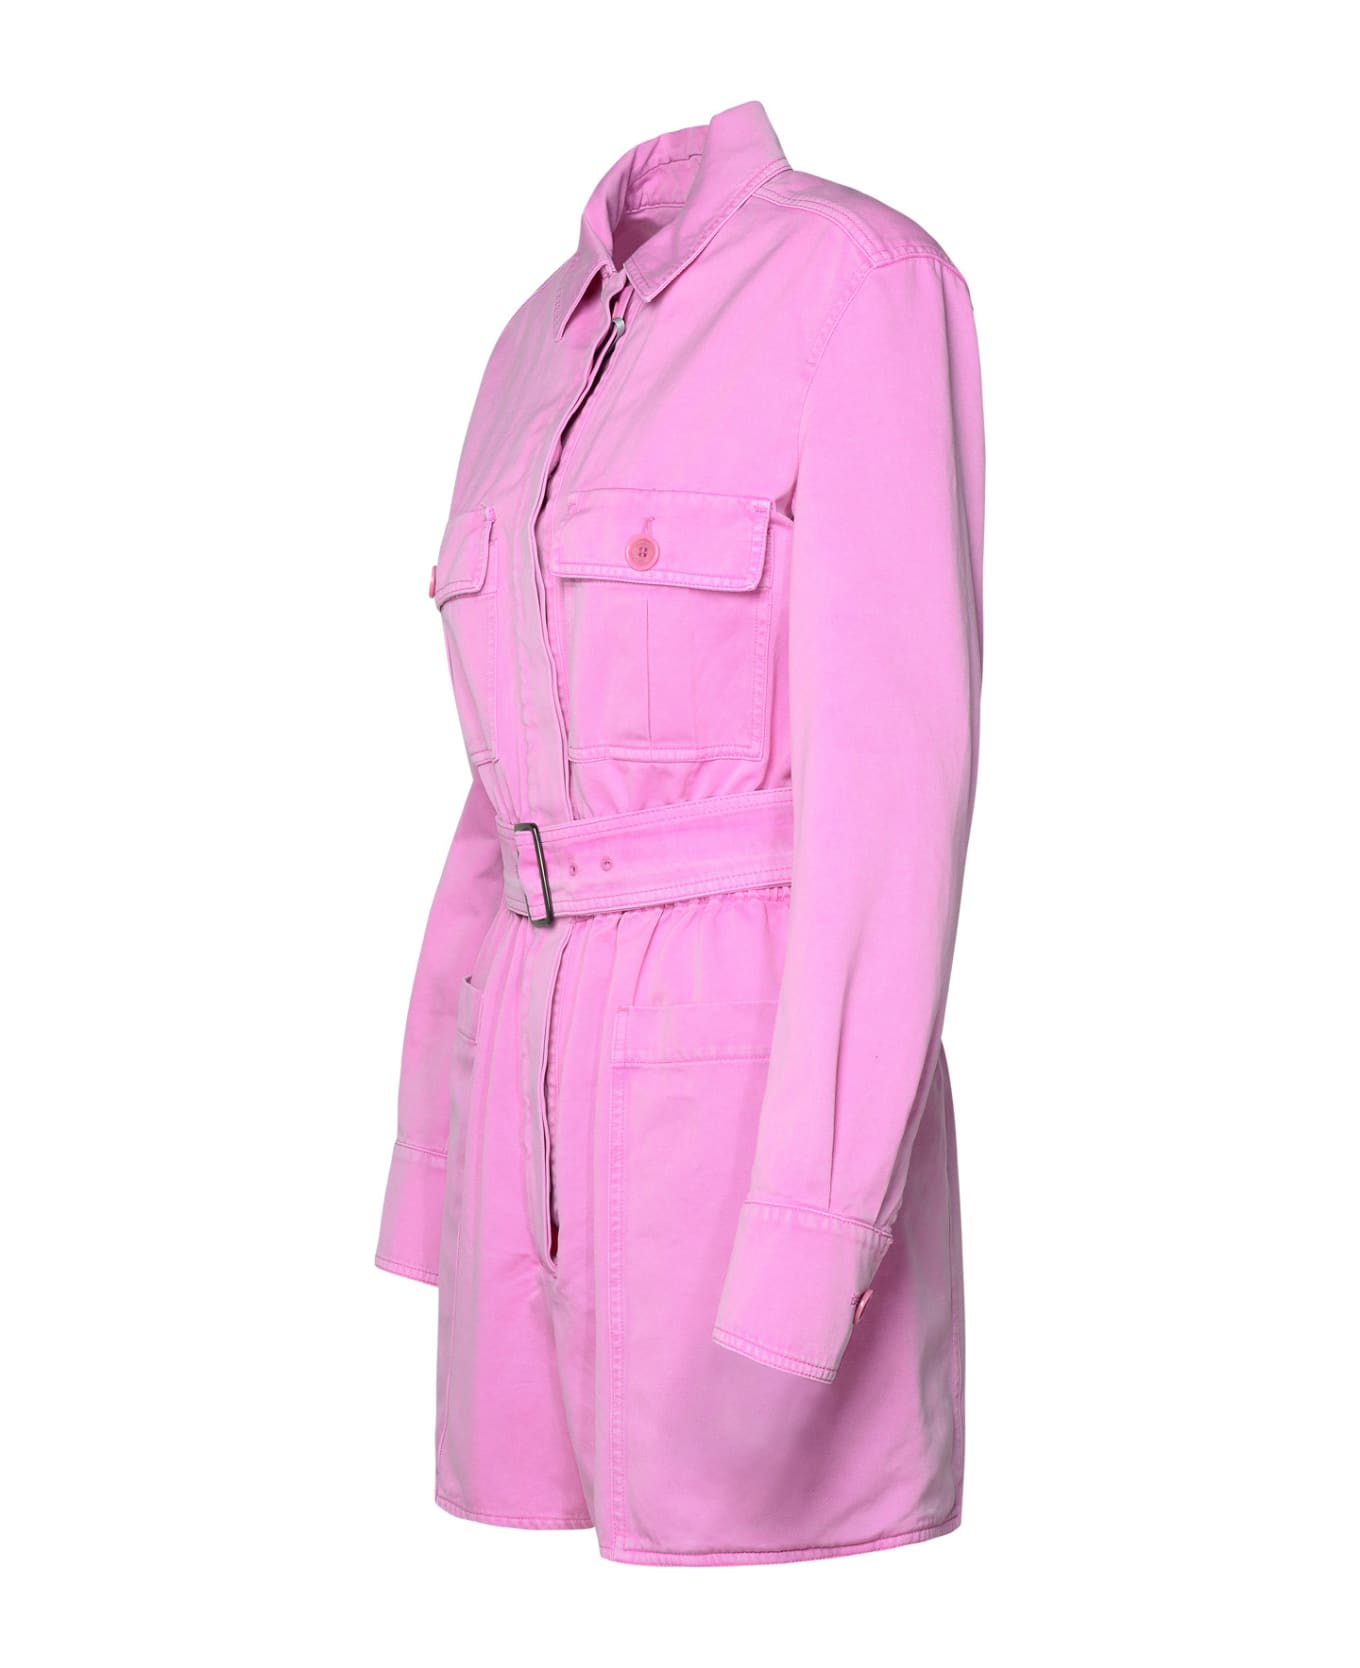 Max Mara Peony Cotton Playsuit - Pink ジャンプスーツ